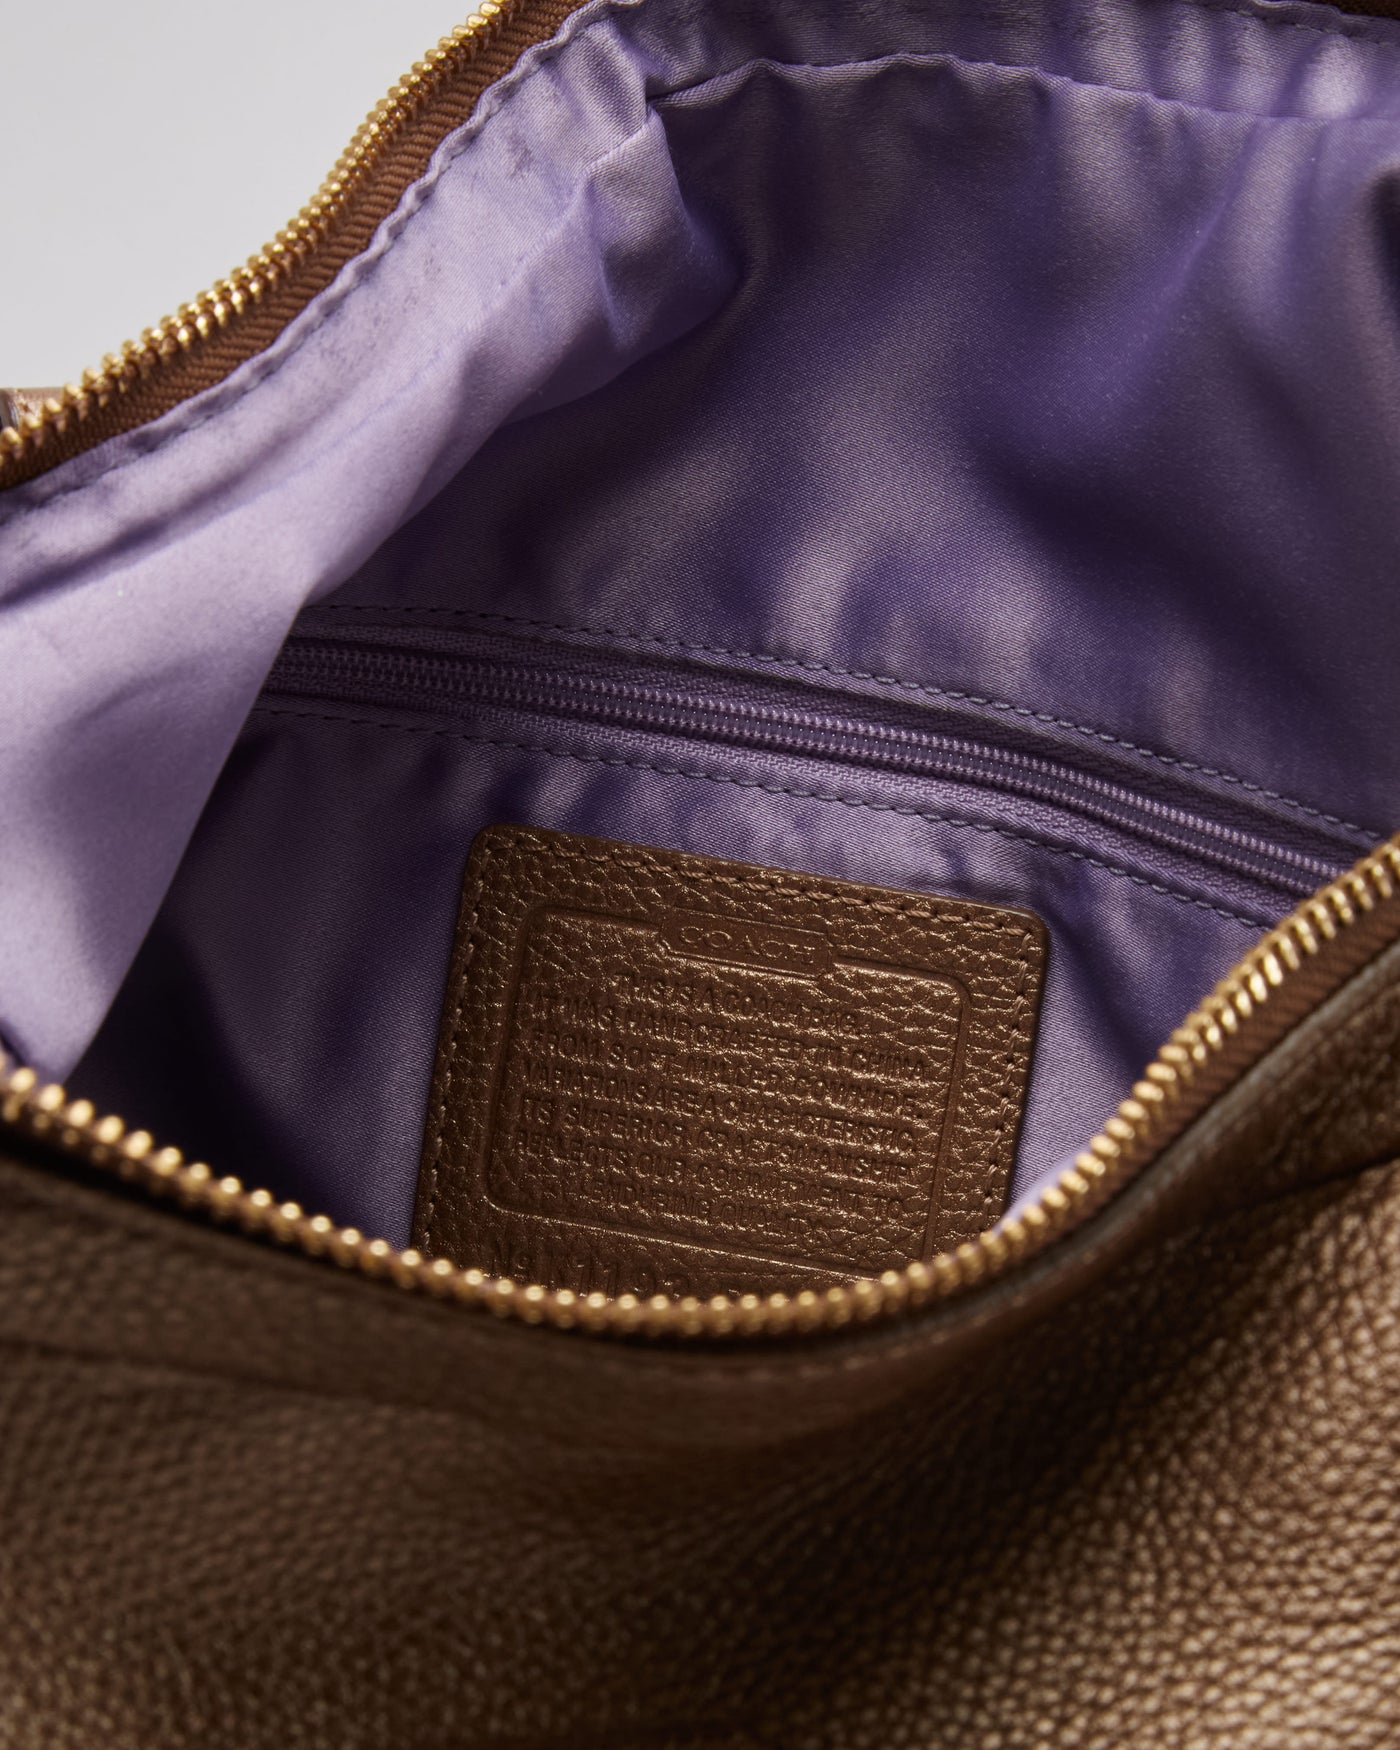 Coach Gold Leather Shoulder Bag - One Size